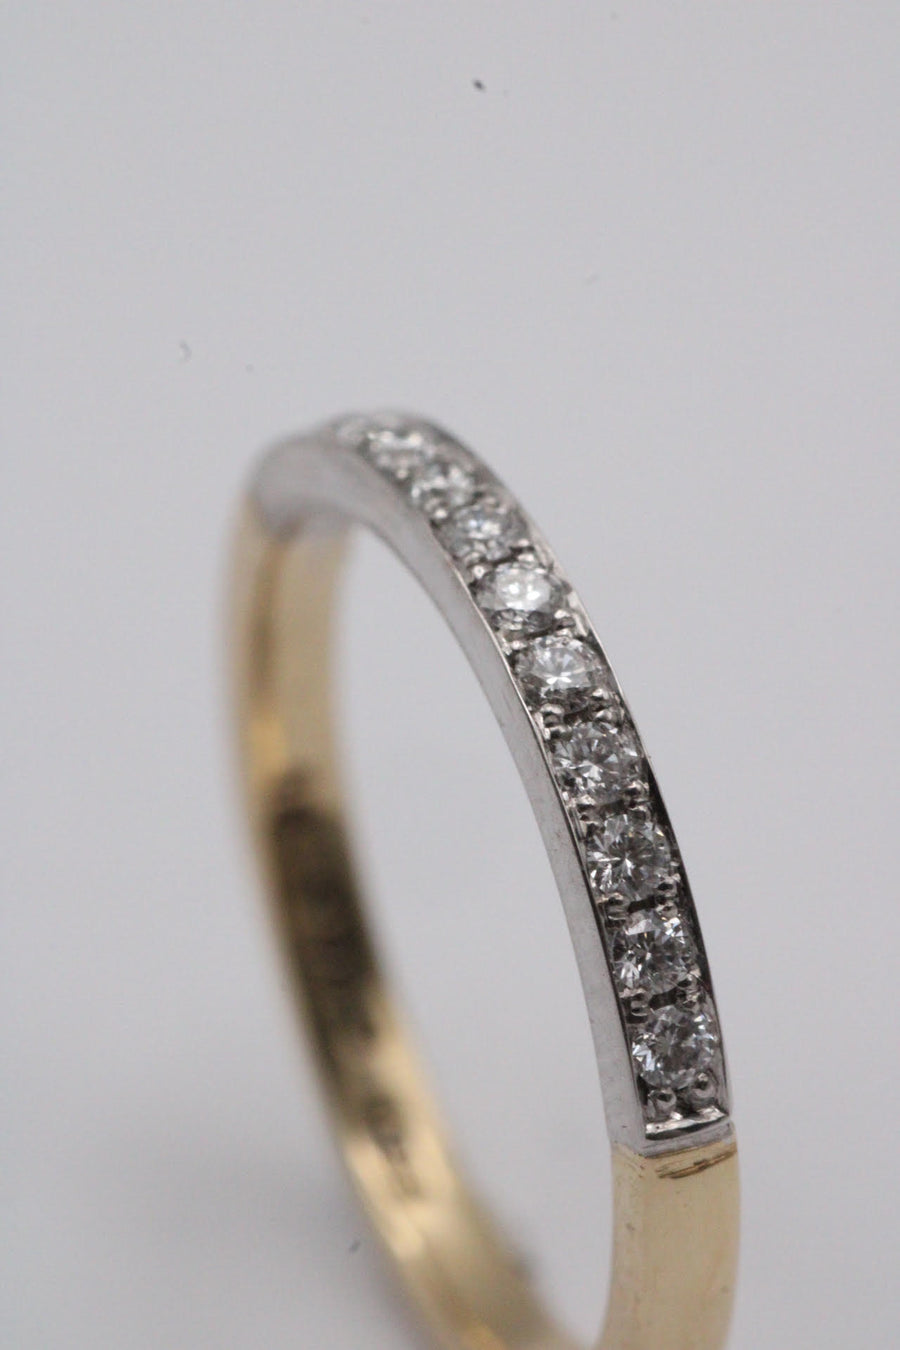 18ct Gold Two Tone Pave Set Diamond Ring